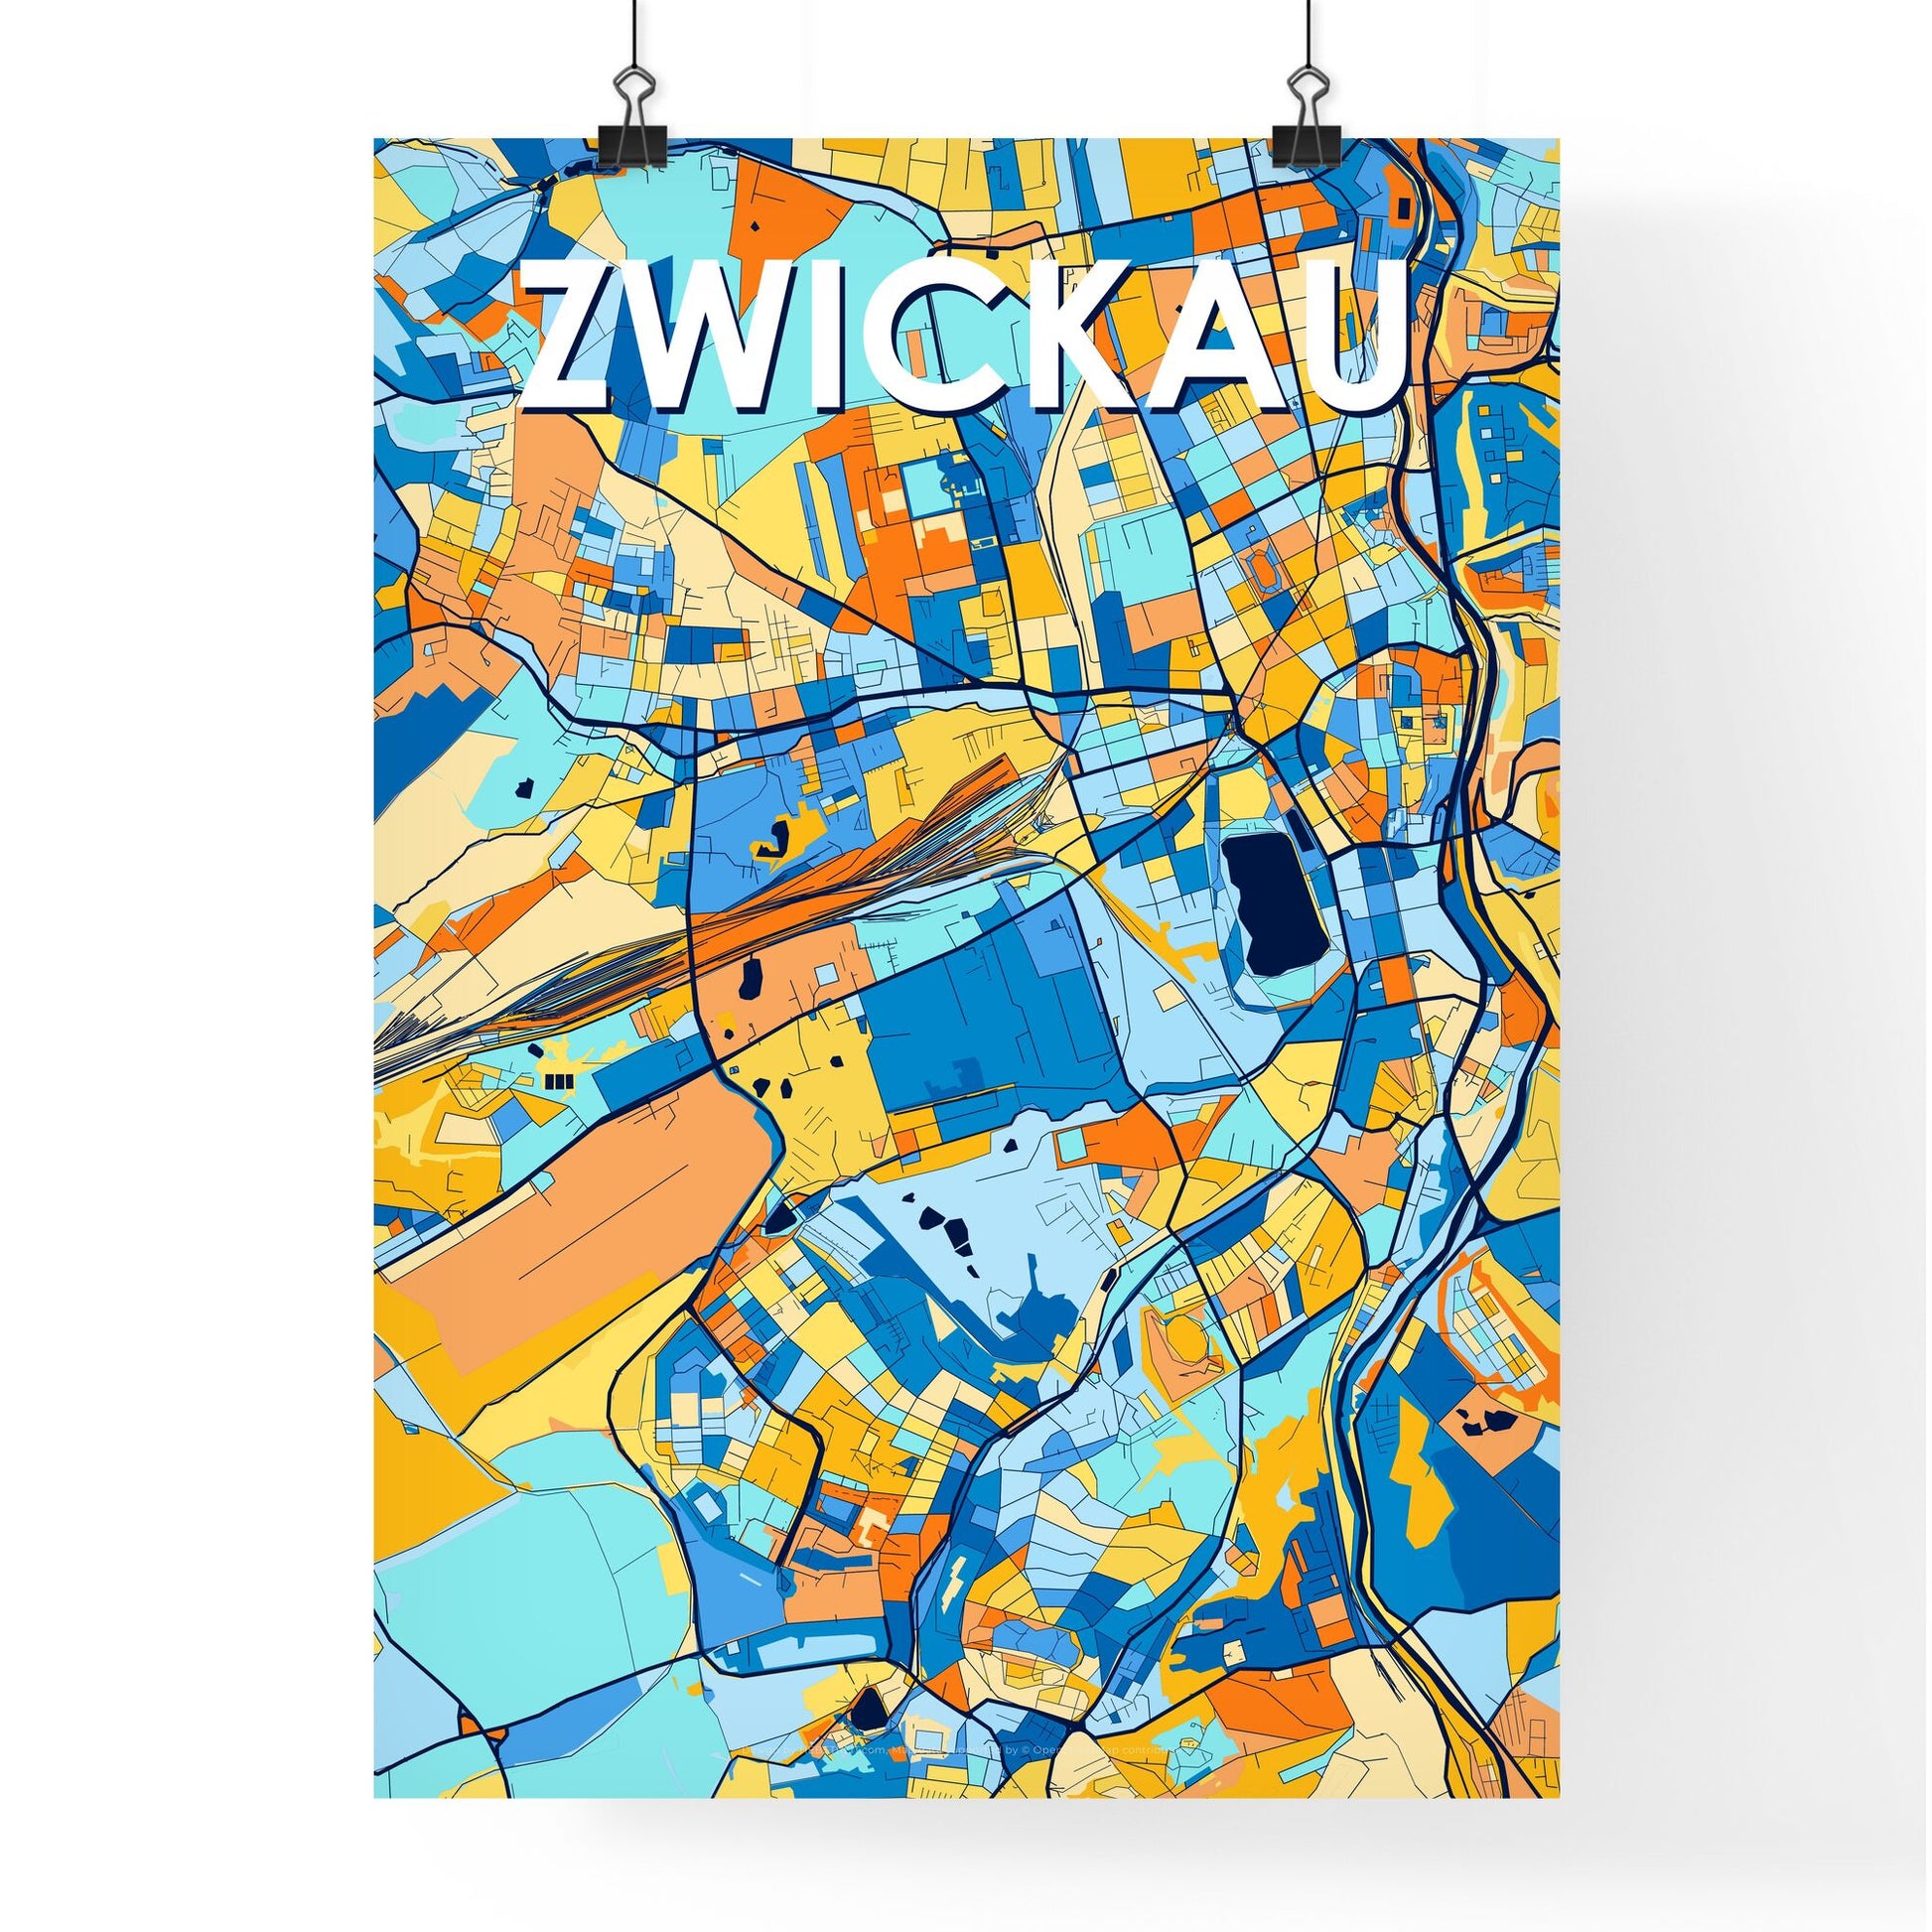 ZWICKAU GERMANY Vibrant Colorful Art Map Poster Blue Orange